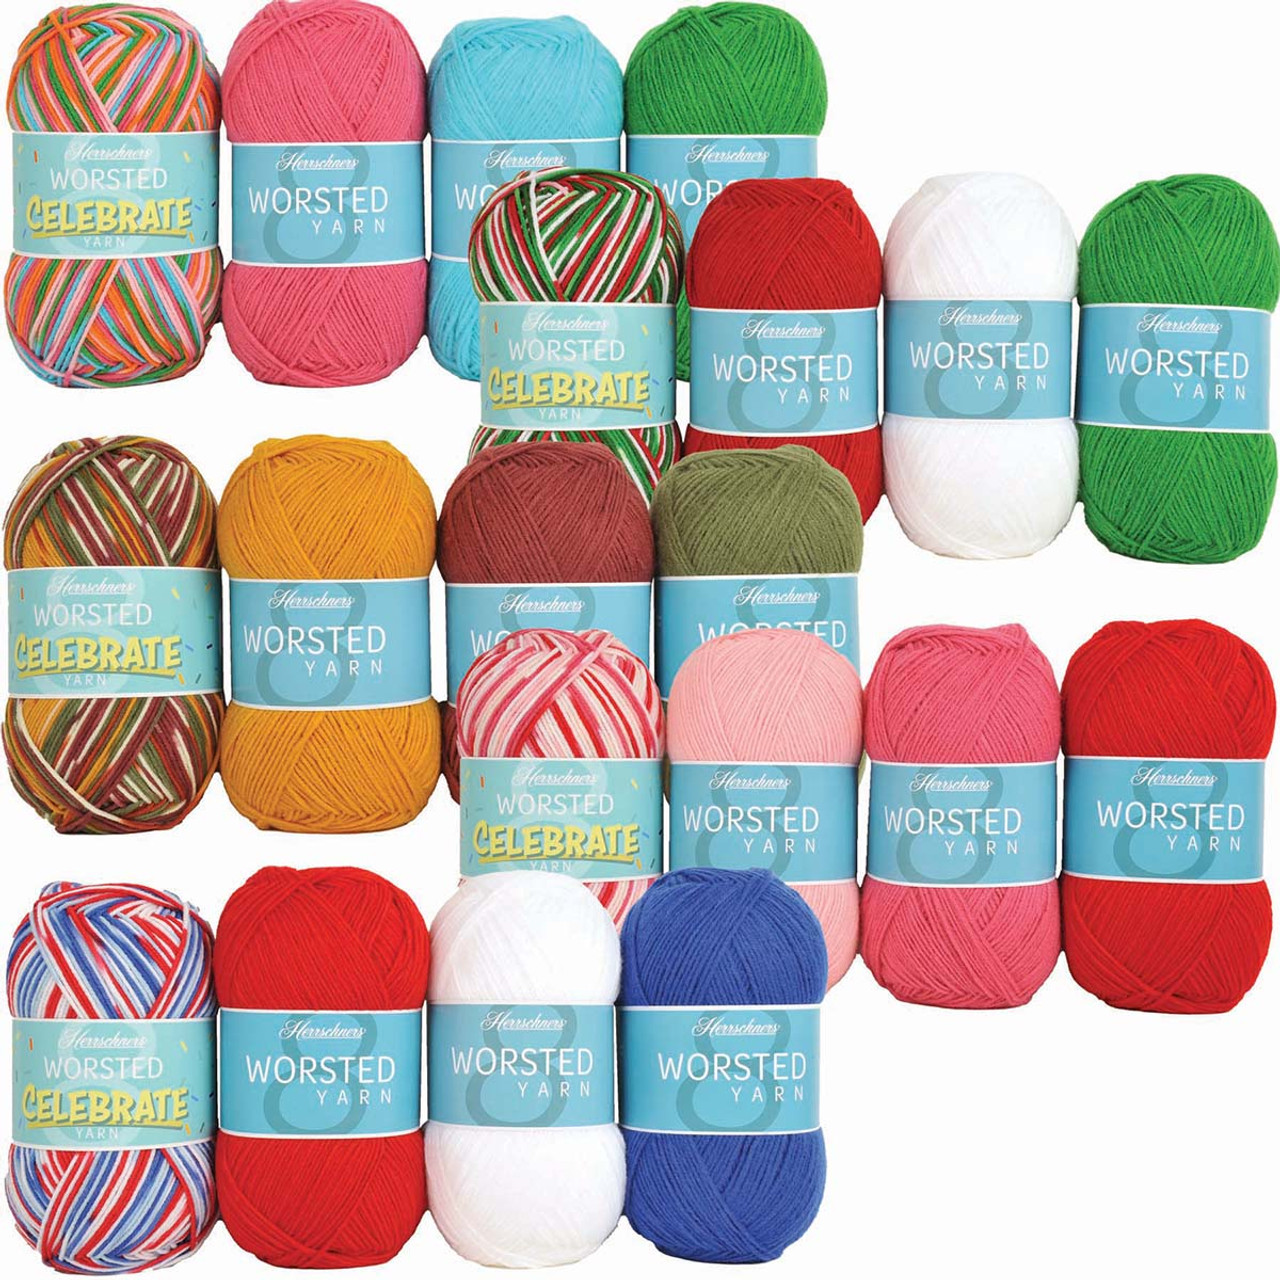 Herrschners Afghan Yarn Multi Yarn Pack